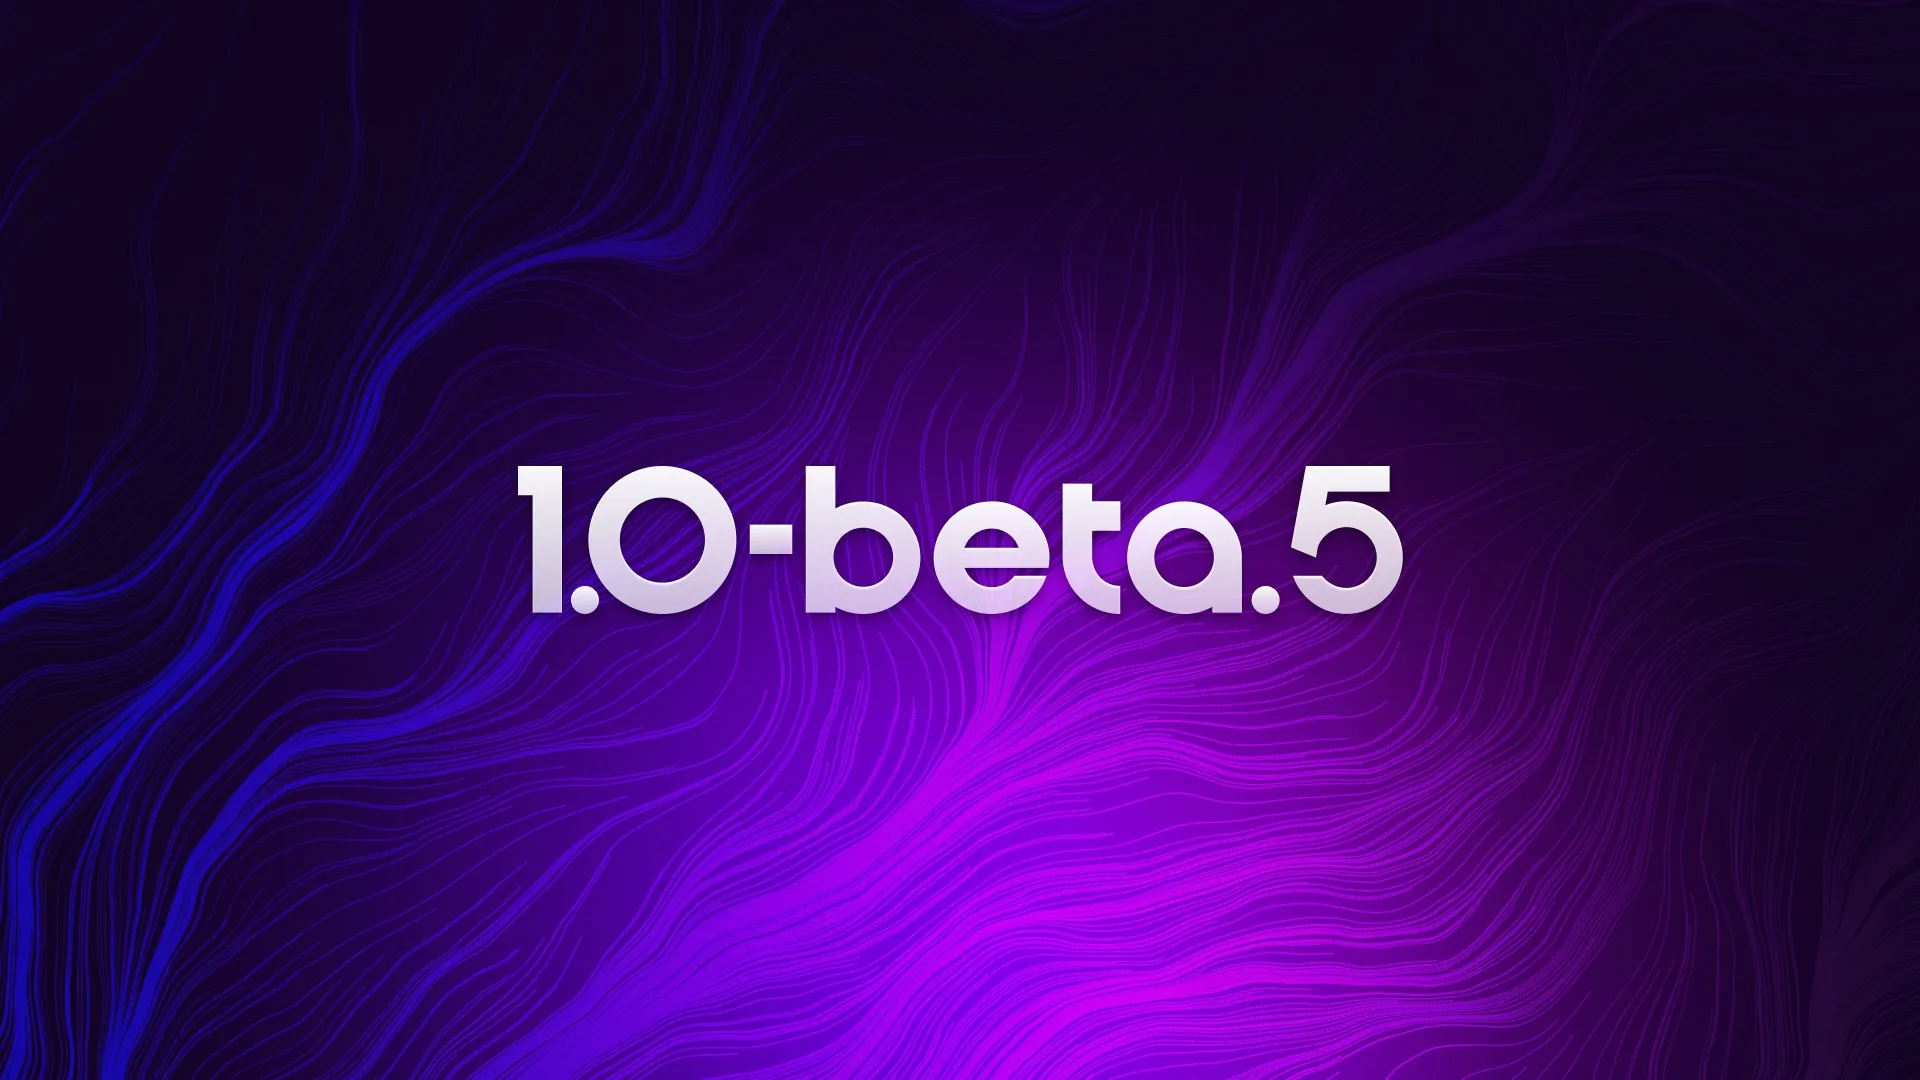 Release v1.0.0-beta.5